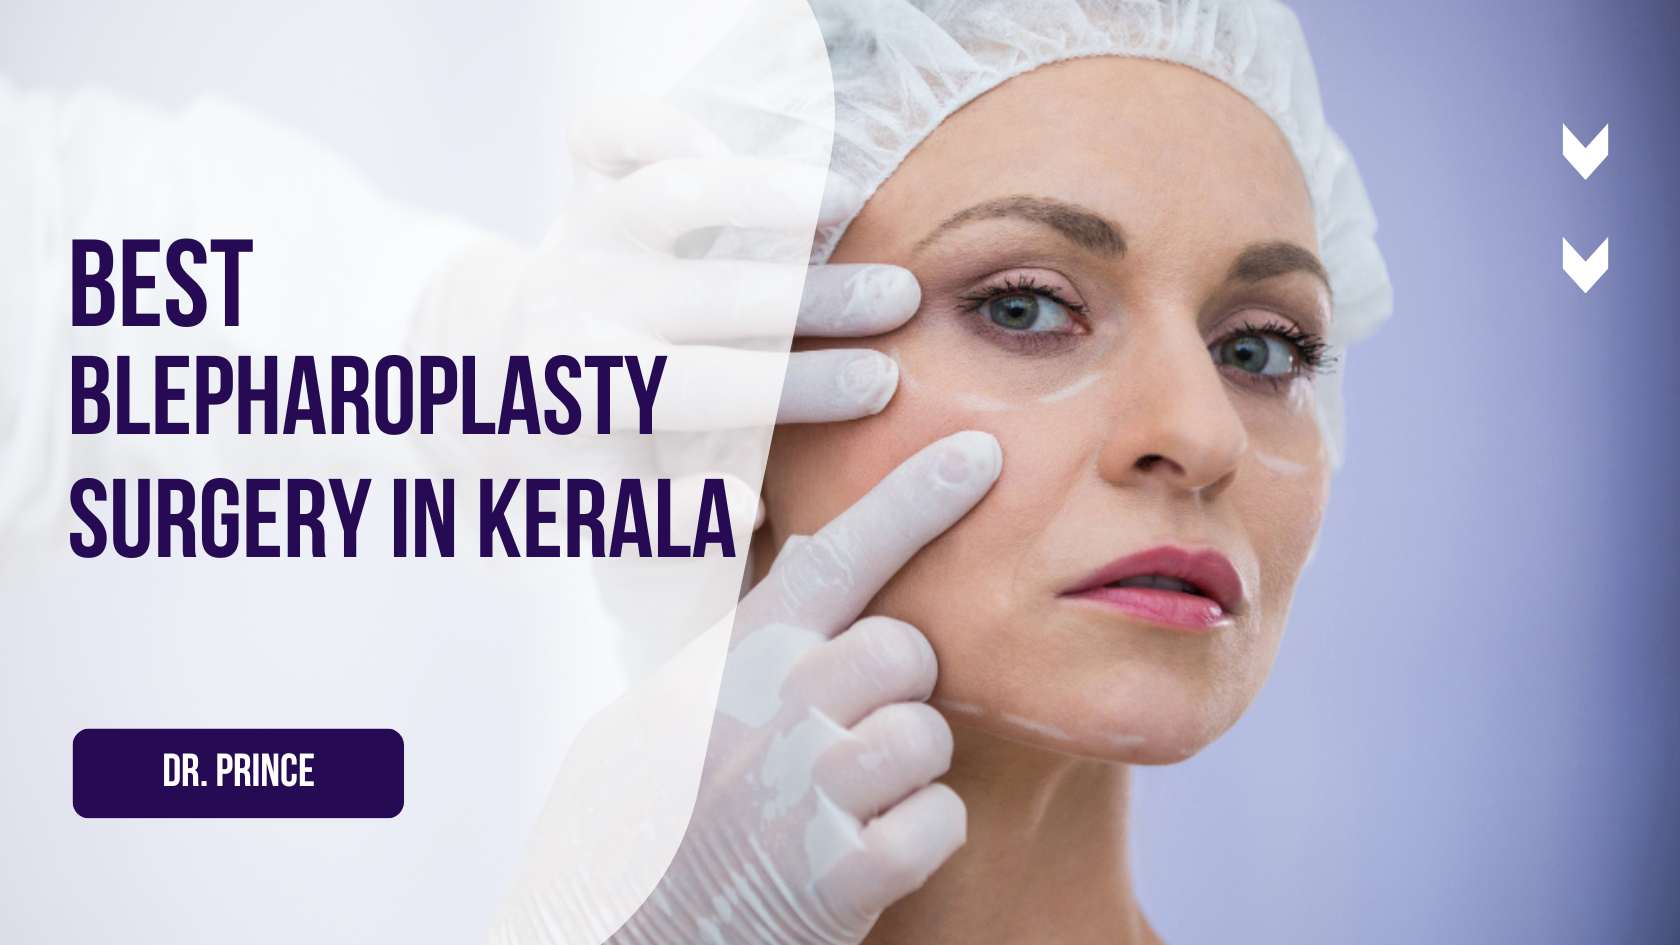 Blepharoplasty Surgery in Kerala - Rejuvenate Your Eyes